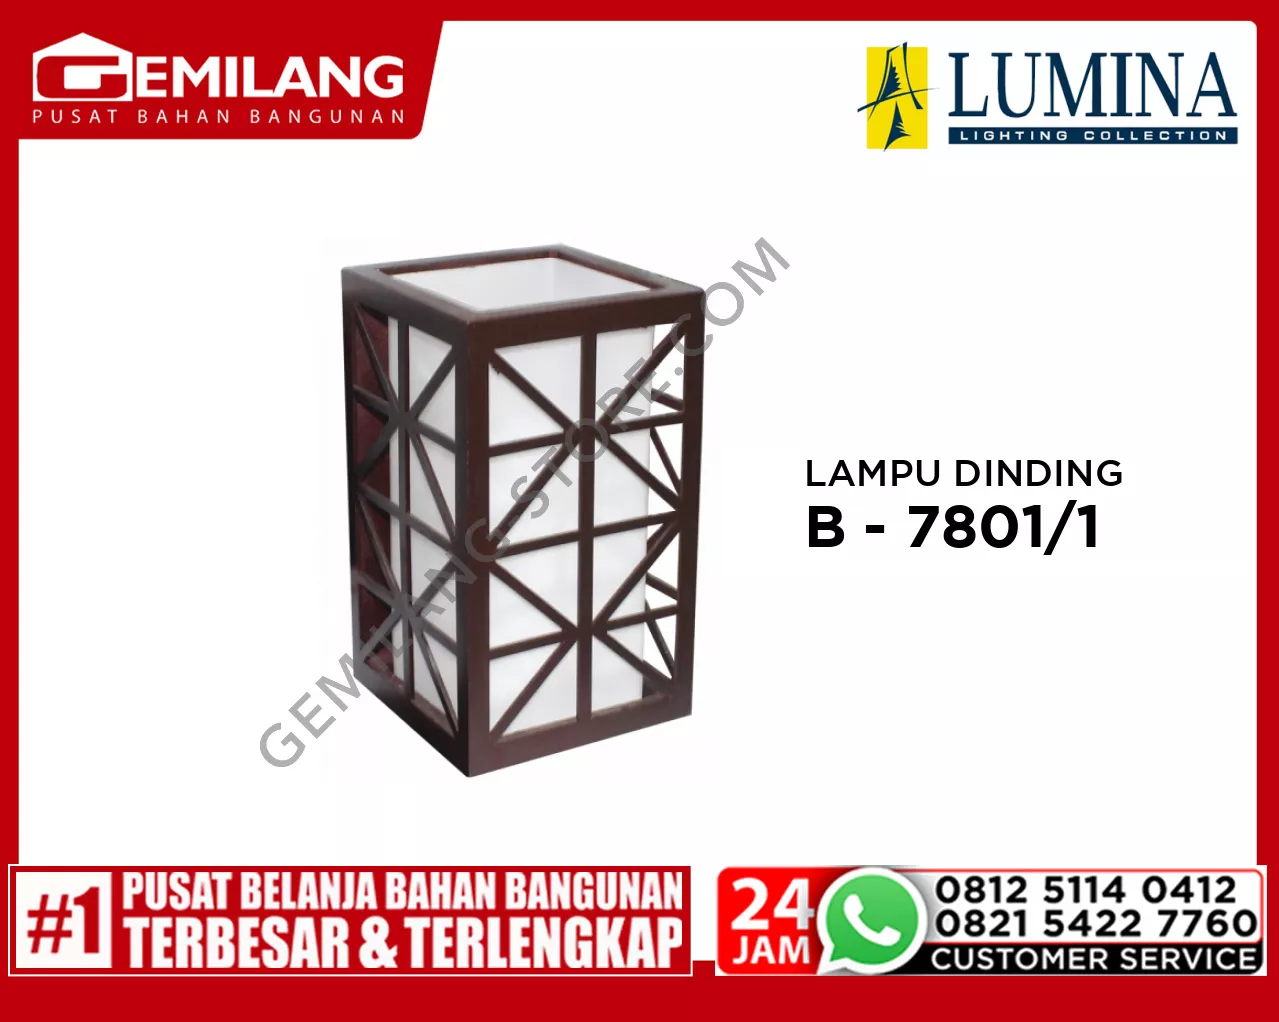 LAMPU DINDING B - 7801/1